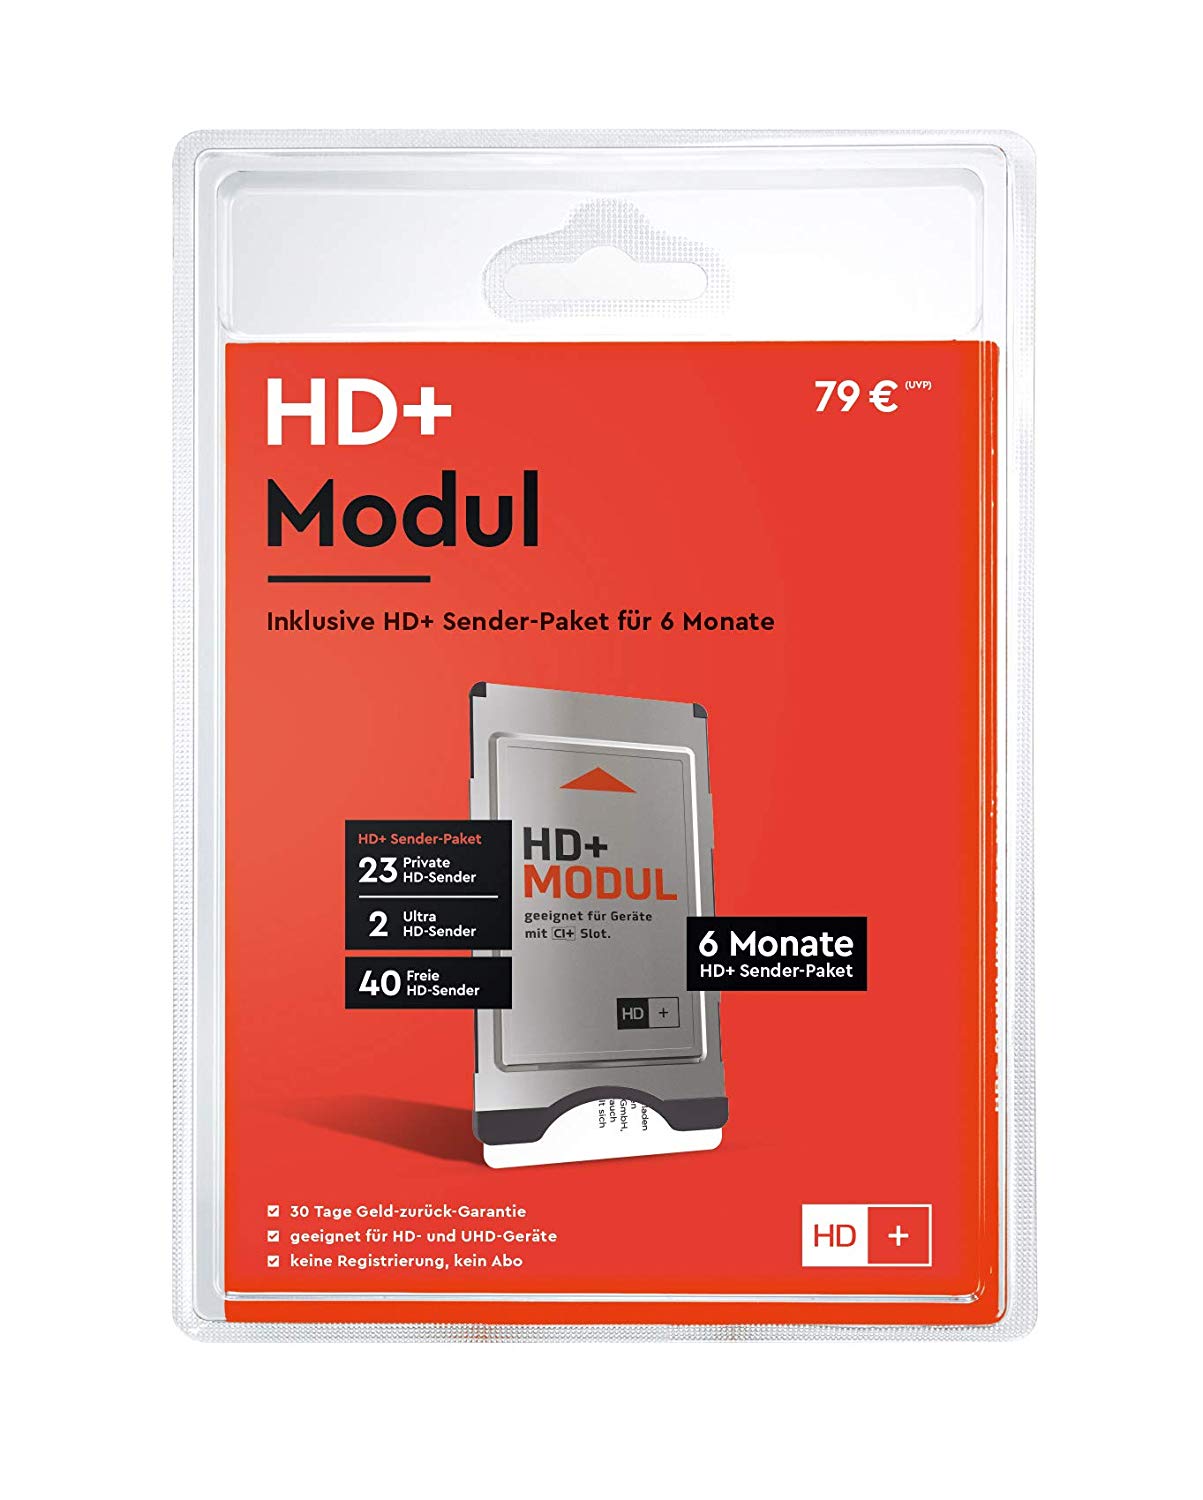 HD Verlängerung per Mail 12 Monate für HD01 HD02 HD03 HD04 Karte SAT Empfang 